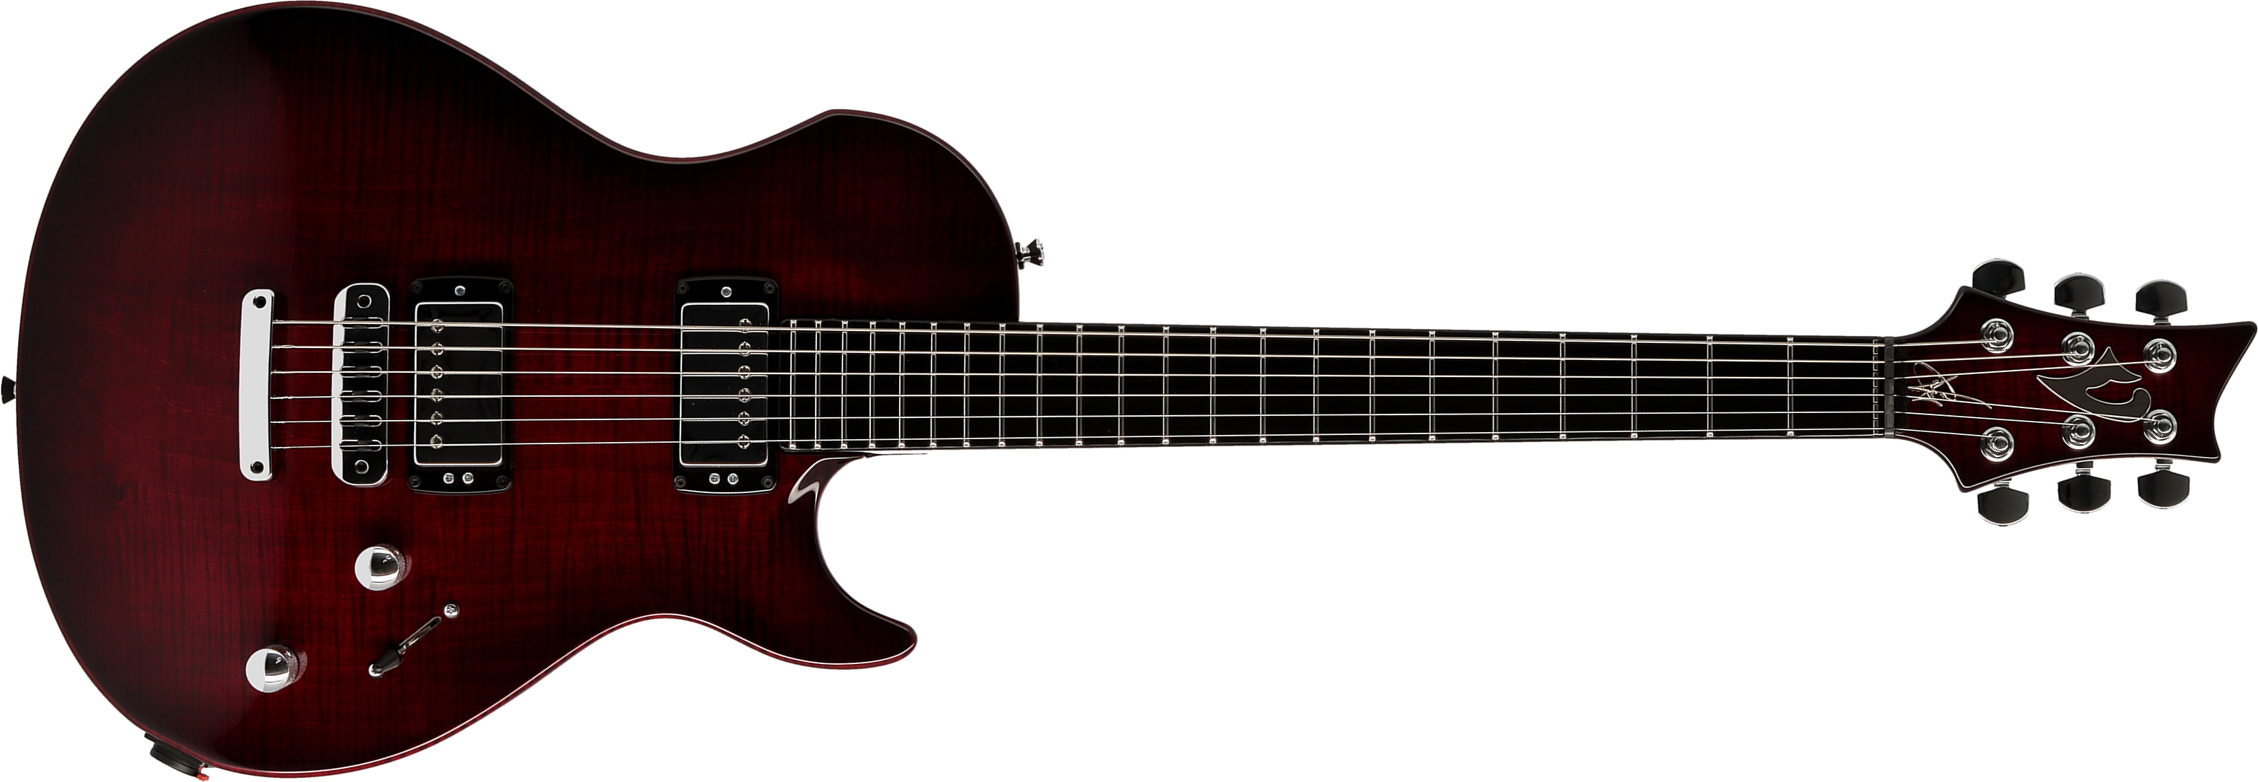 Vigier G.v. Wood Hh Ht Phe - Deep Burgundy Fade - Single cut electric guitar - Main picture